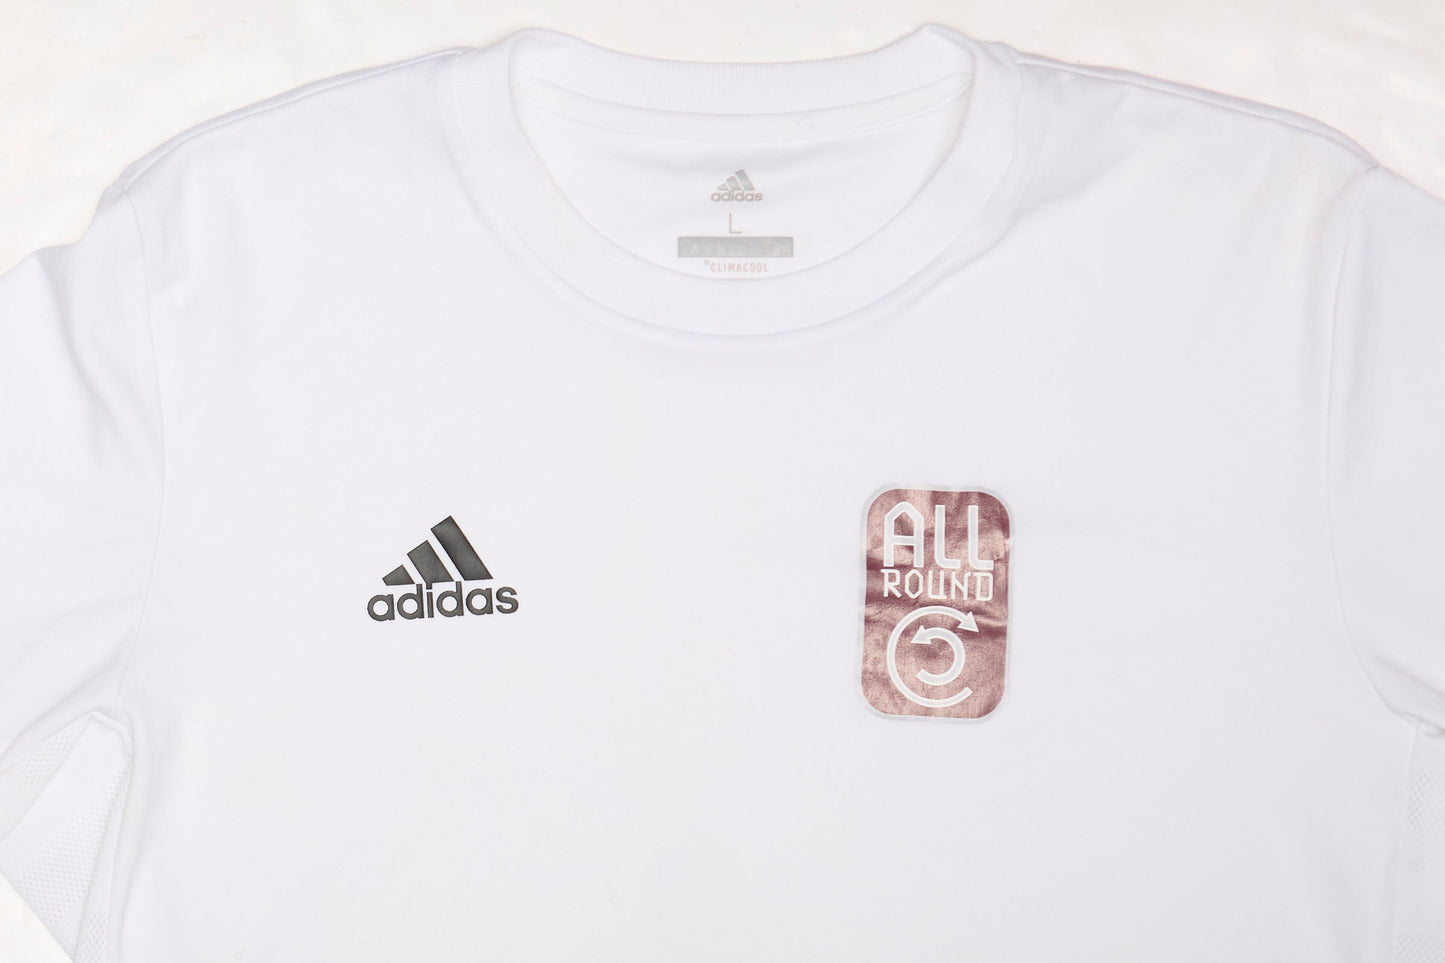 Adidas Football Shirt - L